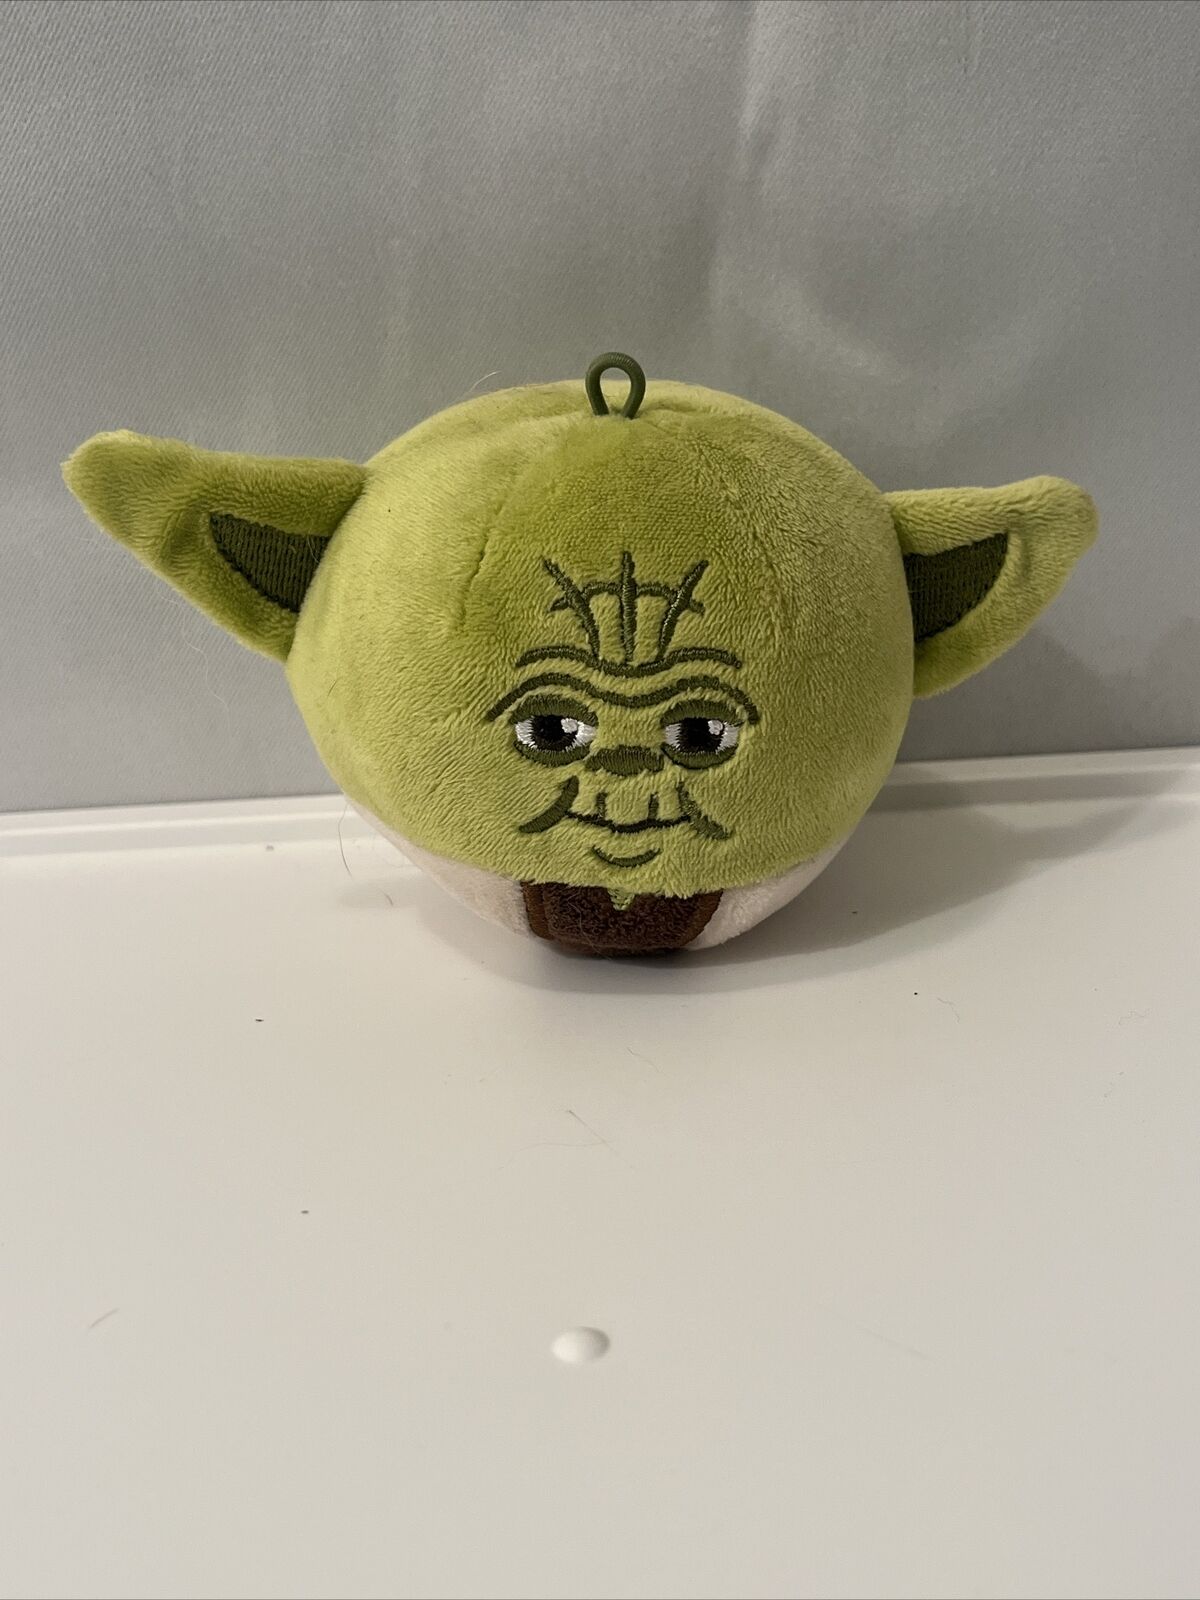 Star Wars Yoda Plush Hallmark Fluffballs Disney Ornament Lucas Films Stuffed Toy